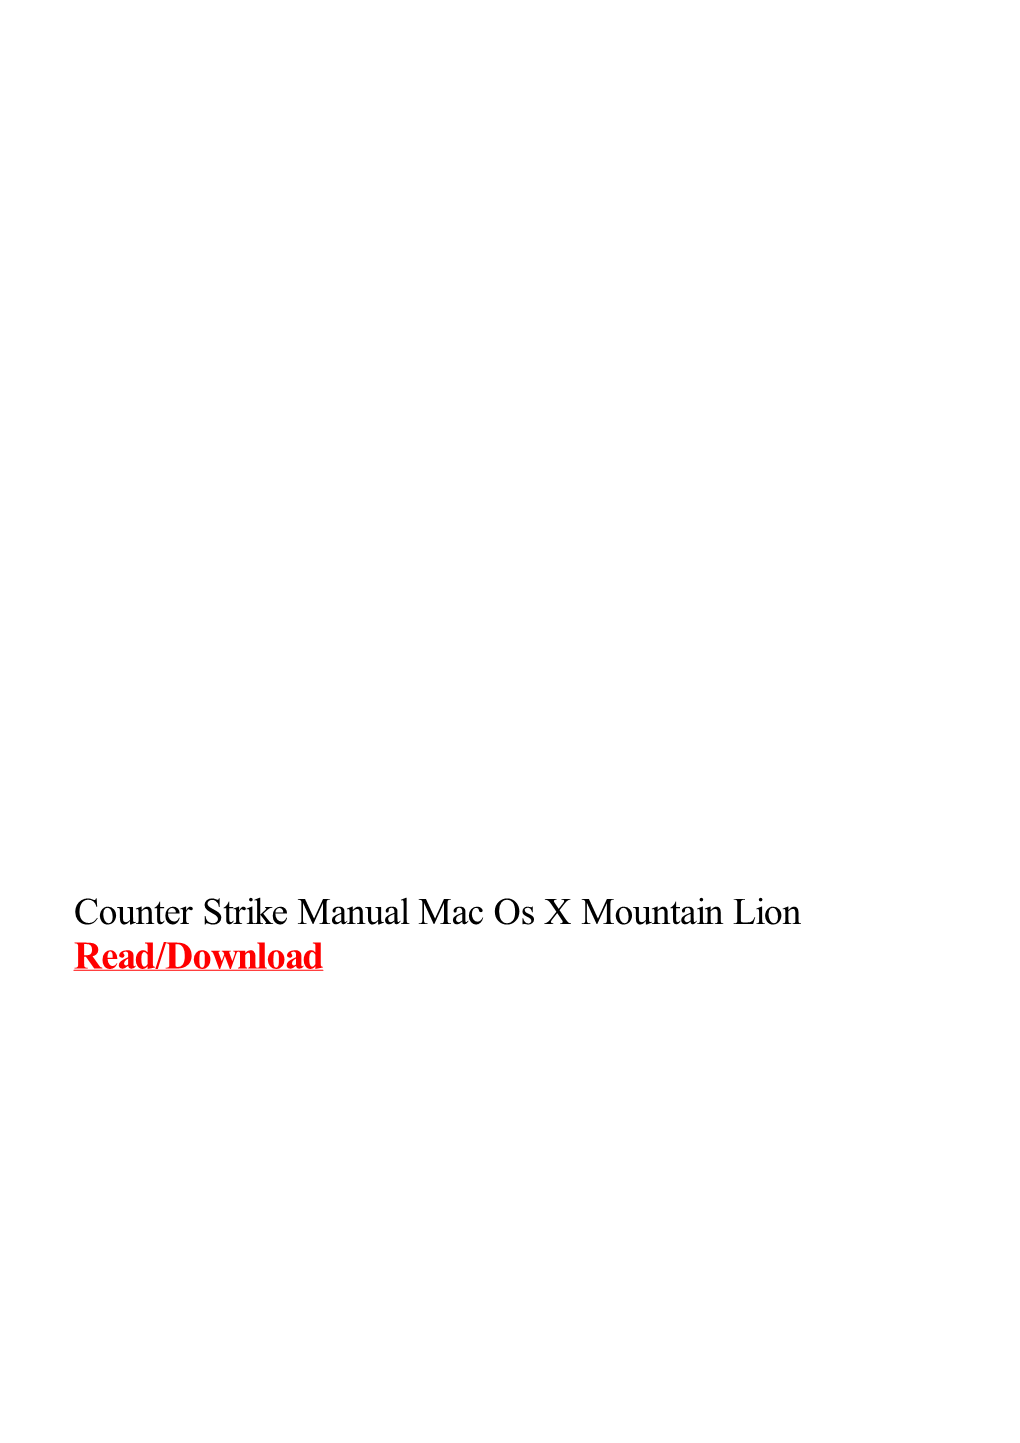 Counter Strike Manual Mac Os X Mountain Lion